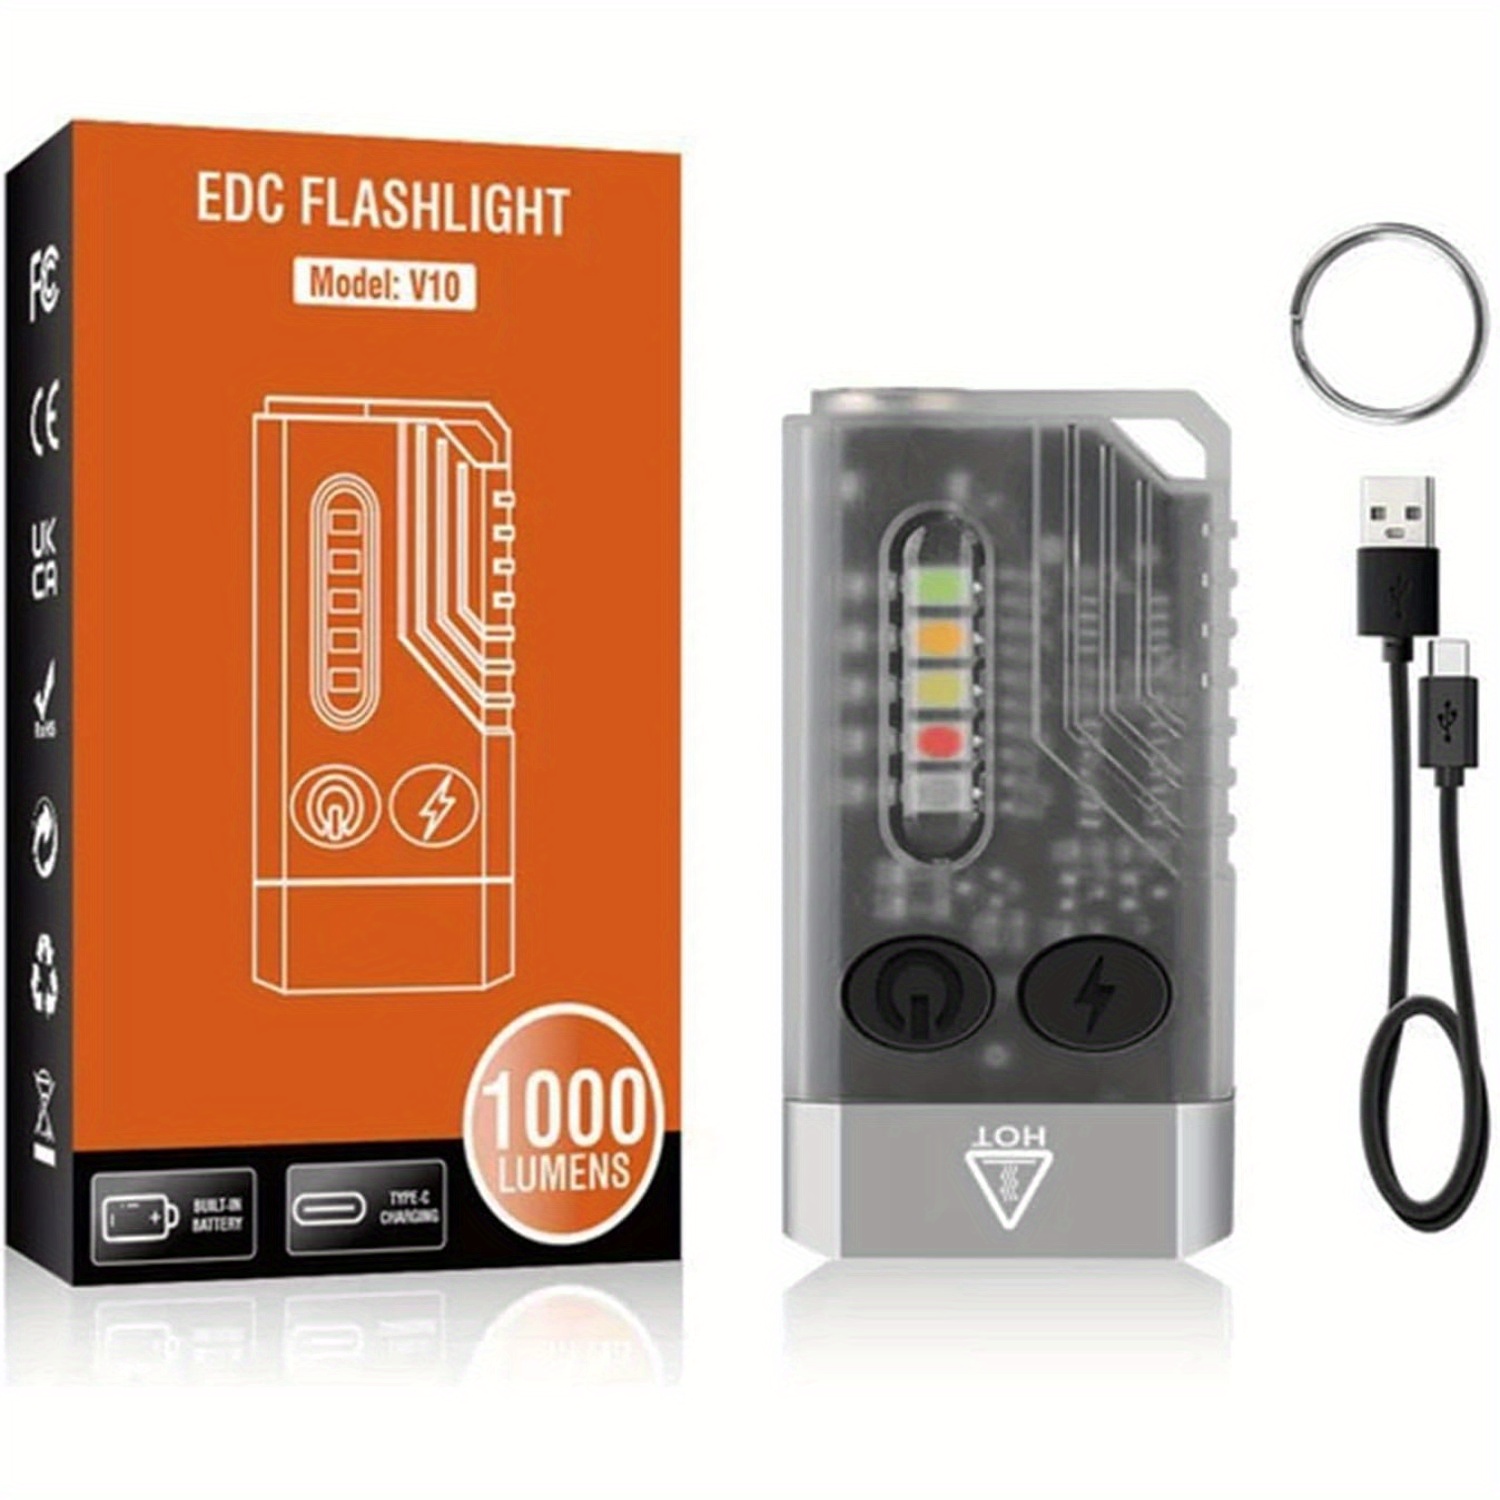 

Flashlight, Small Powerful Edc Flashlight With Red Uv Blue Light - Super Bright 1000 Lumens, Multifunctional Rechargeable Flashlight